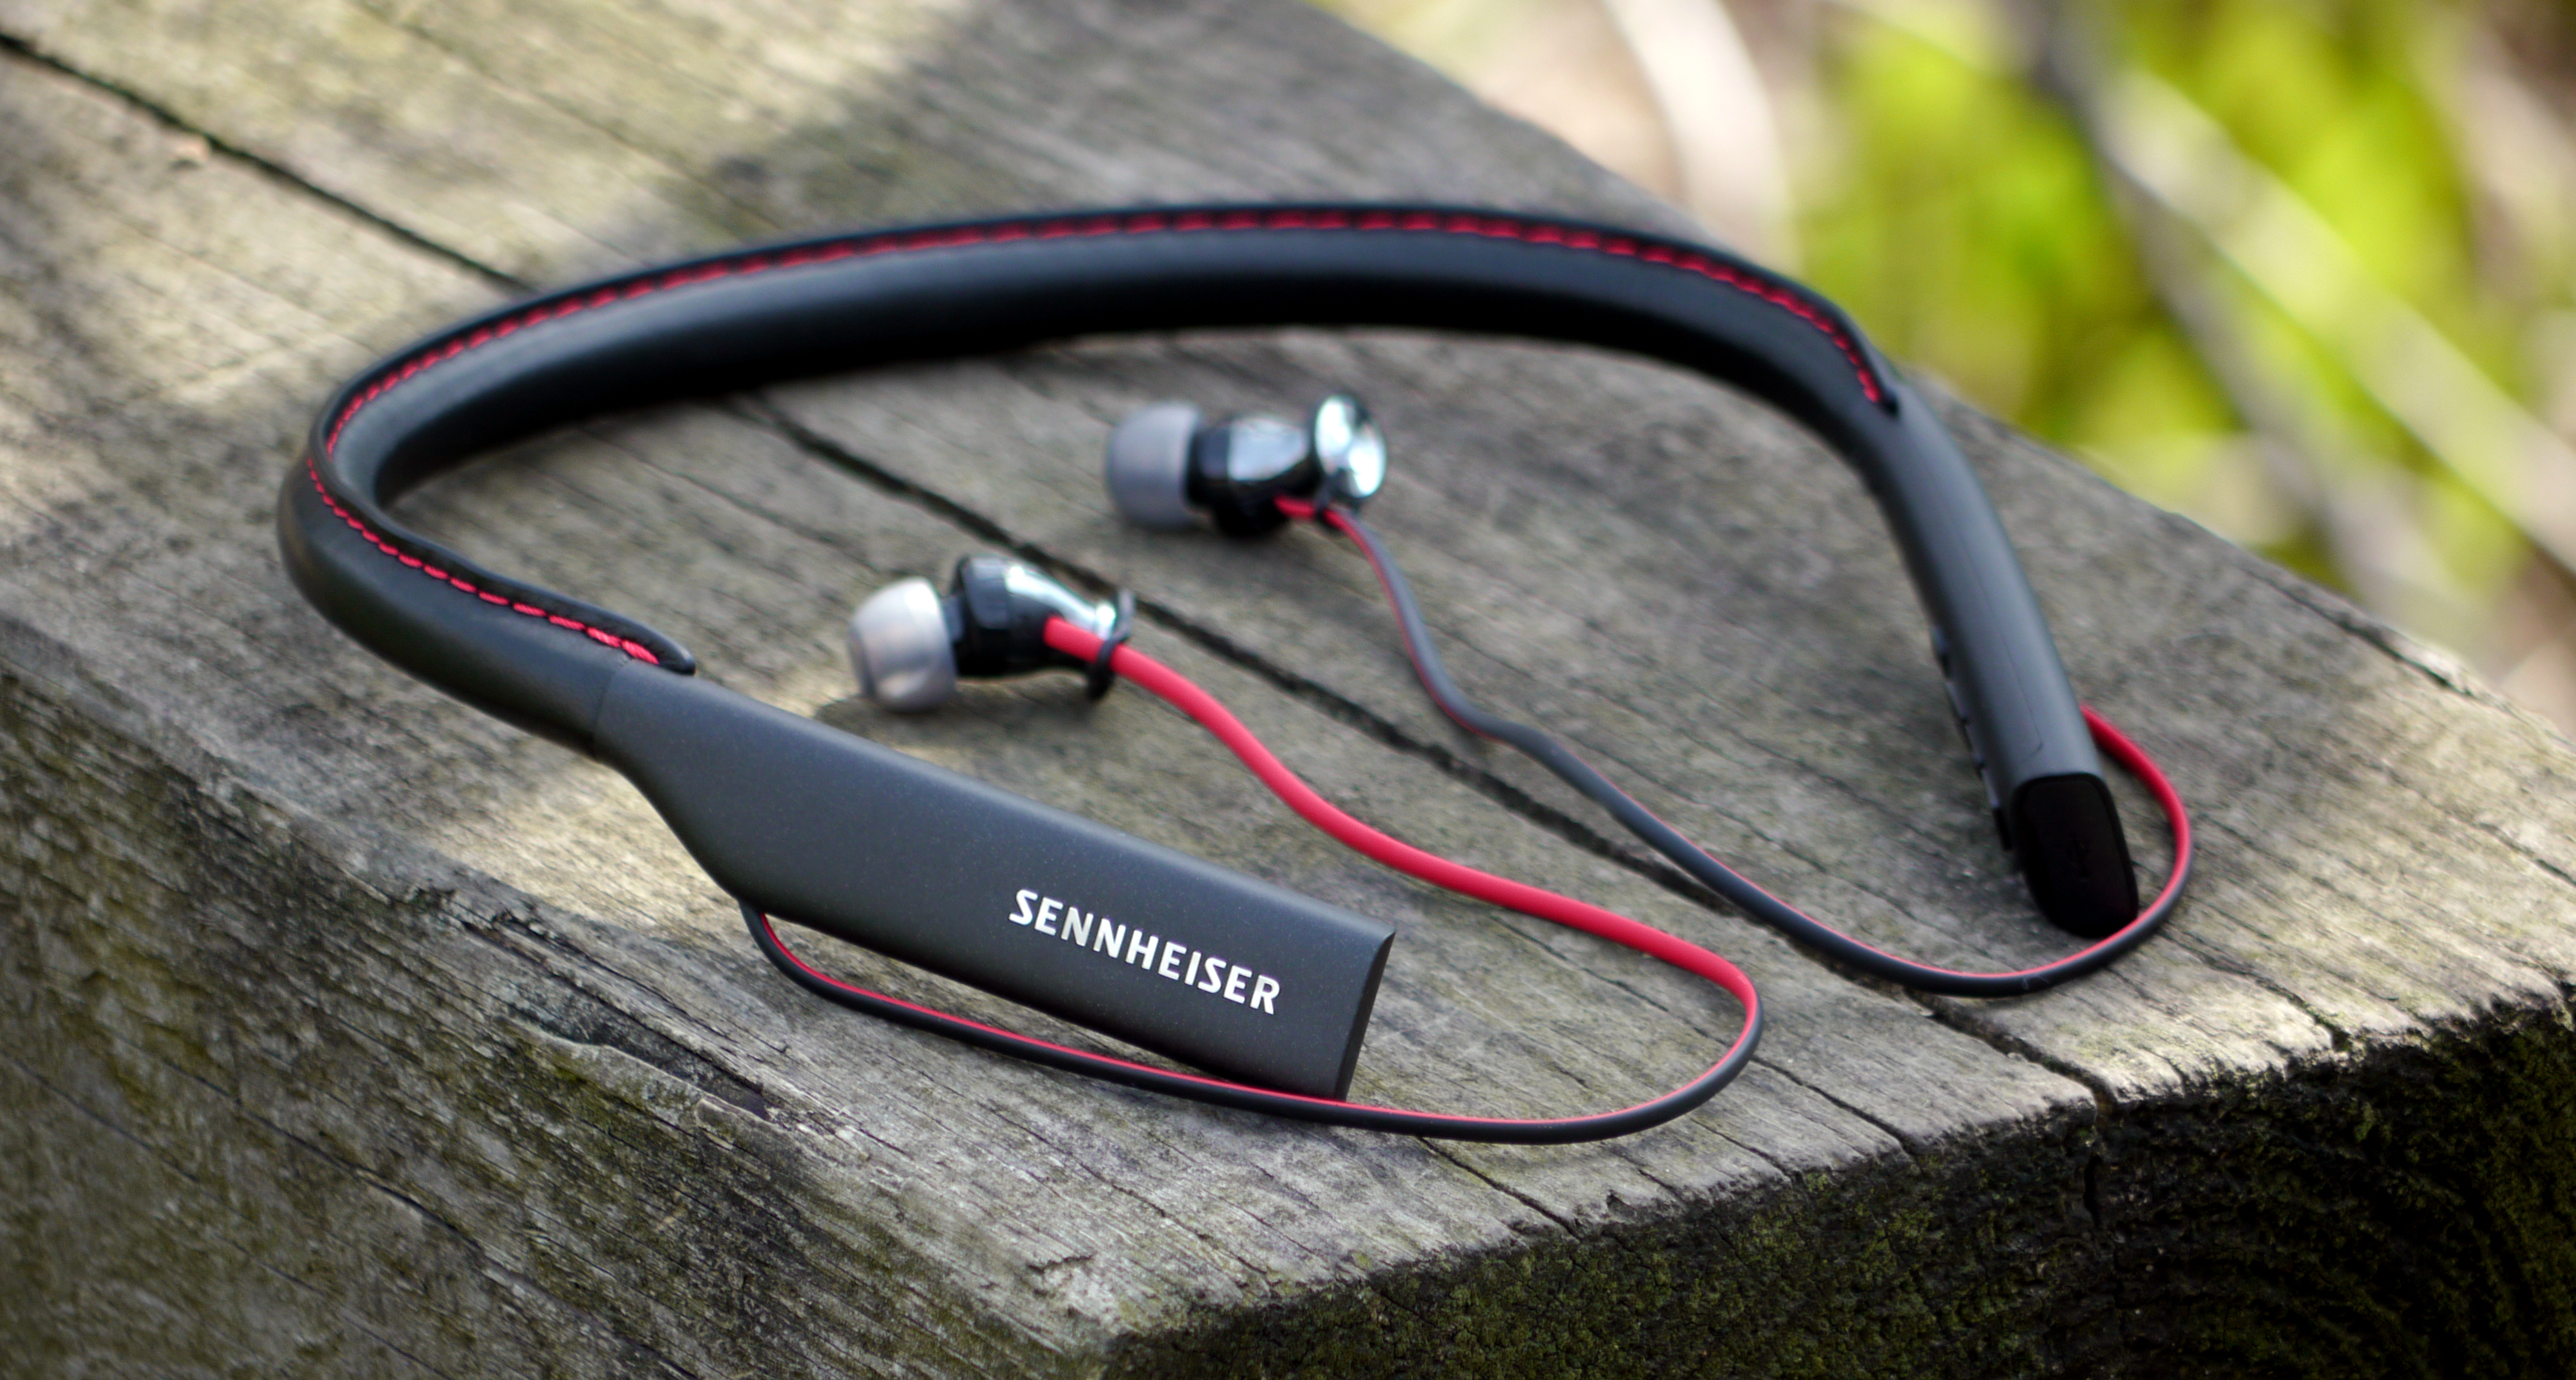 play audible audiobboks on sennheiser wireless earbus